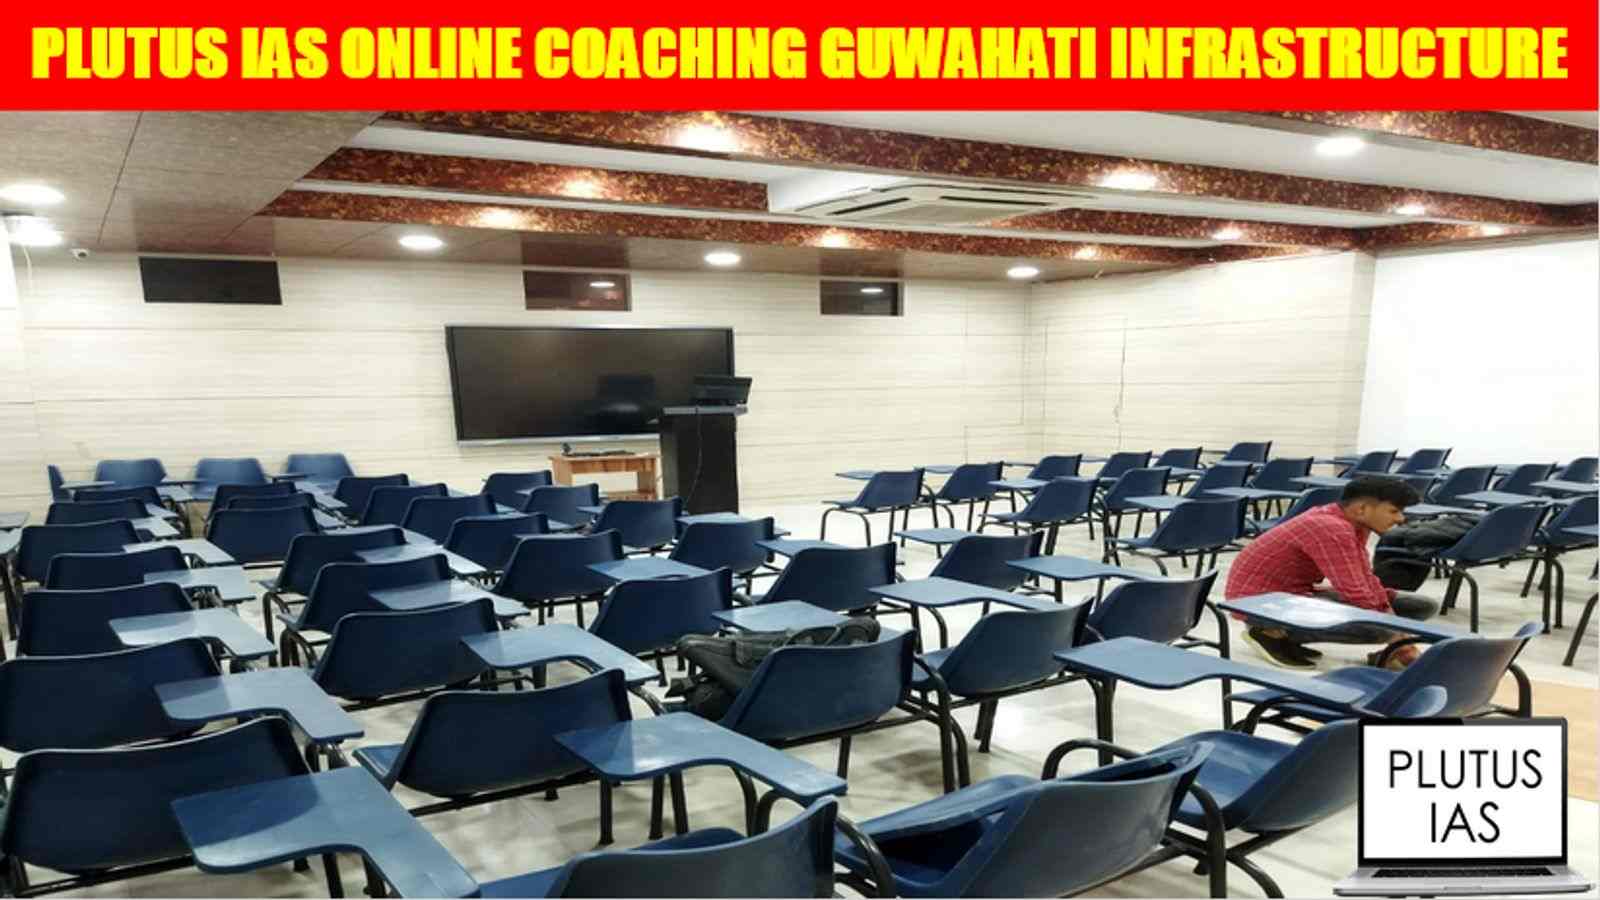 Plutus IAS Online Coaching Guwahati Infrastructure